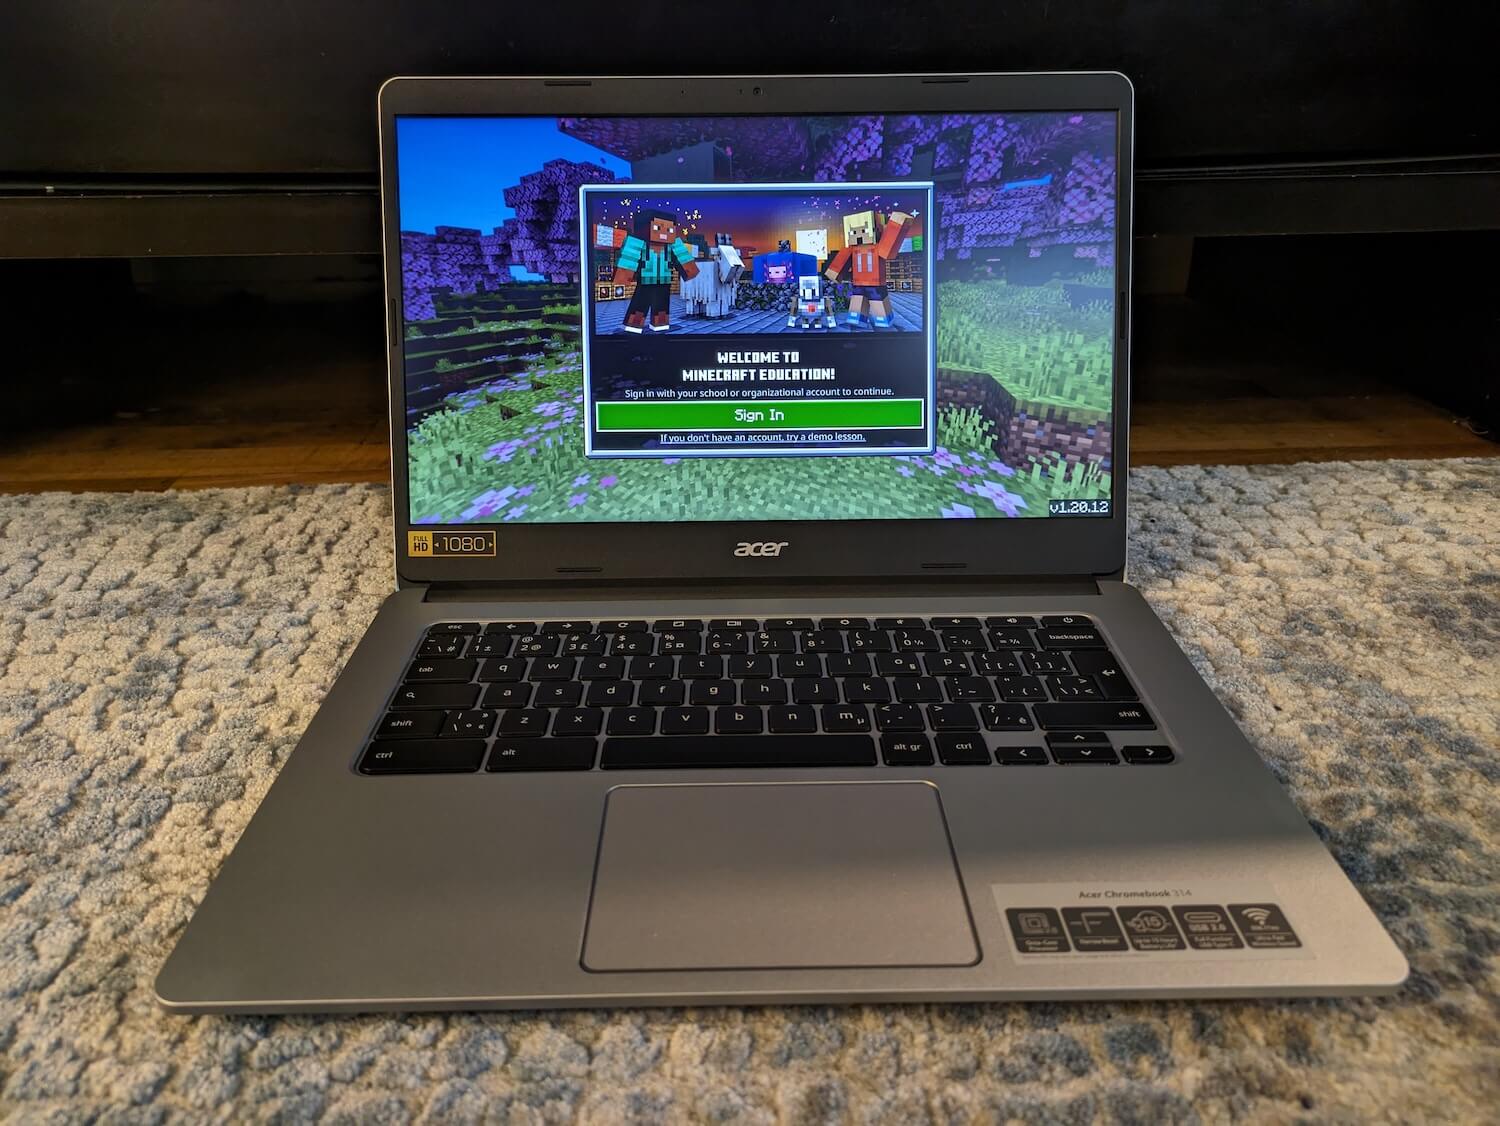 Acer 314 Chromebook with Minecraft app